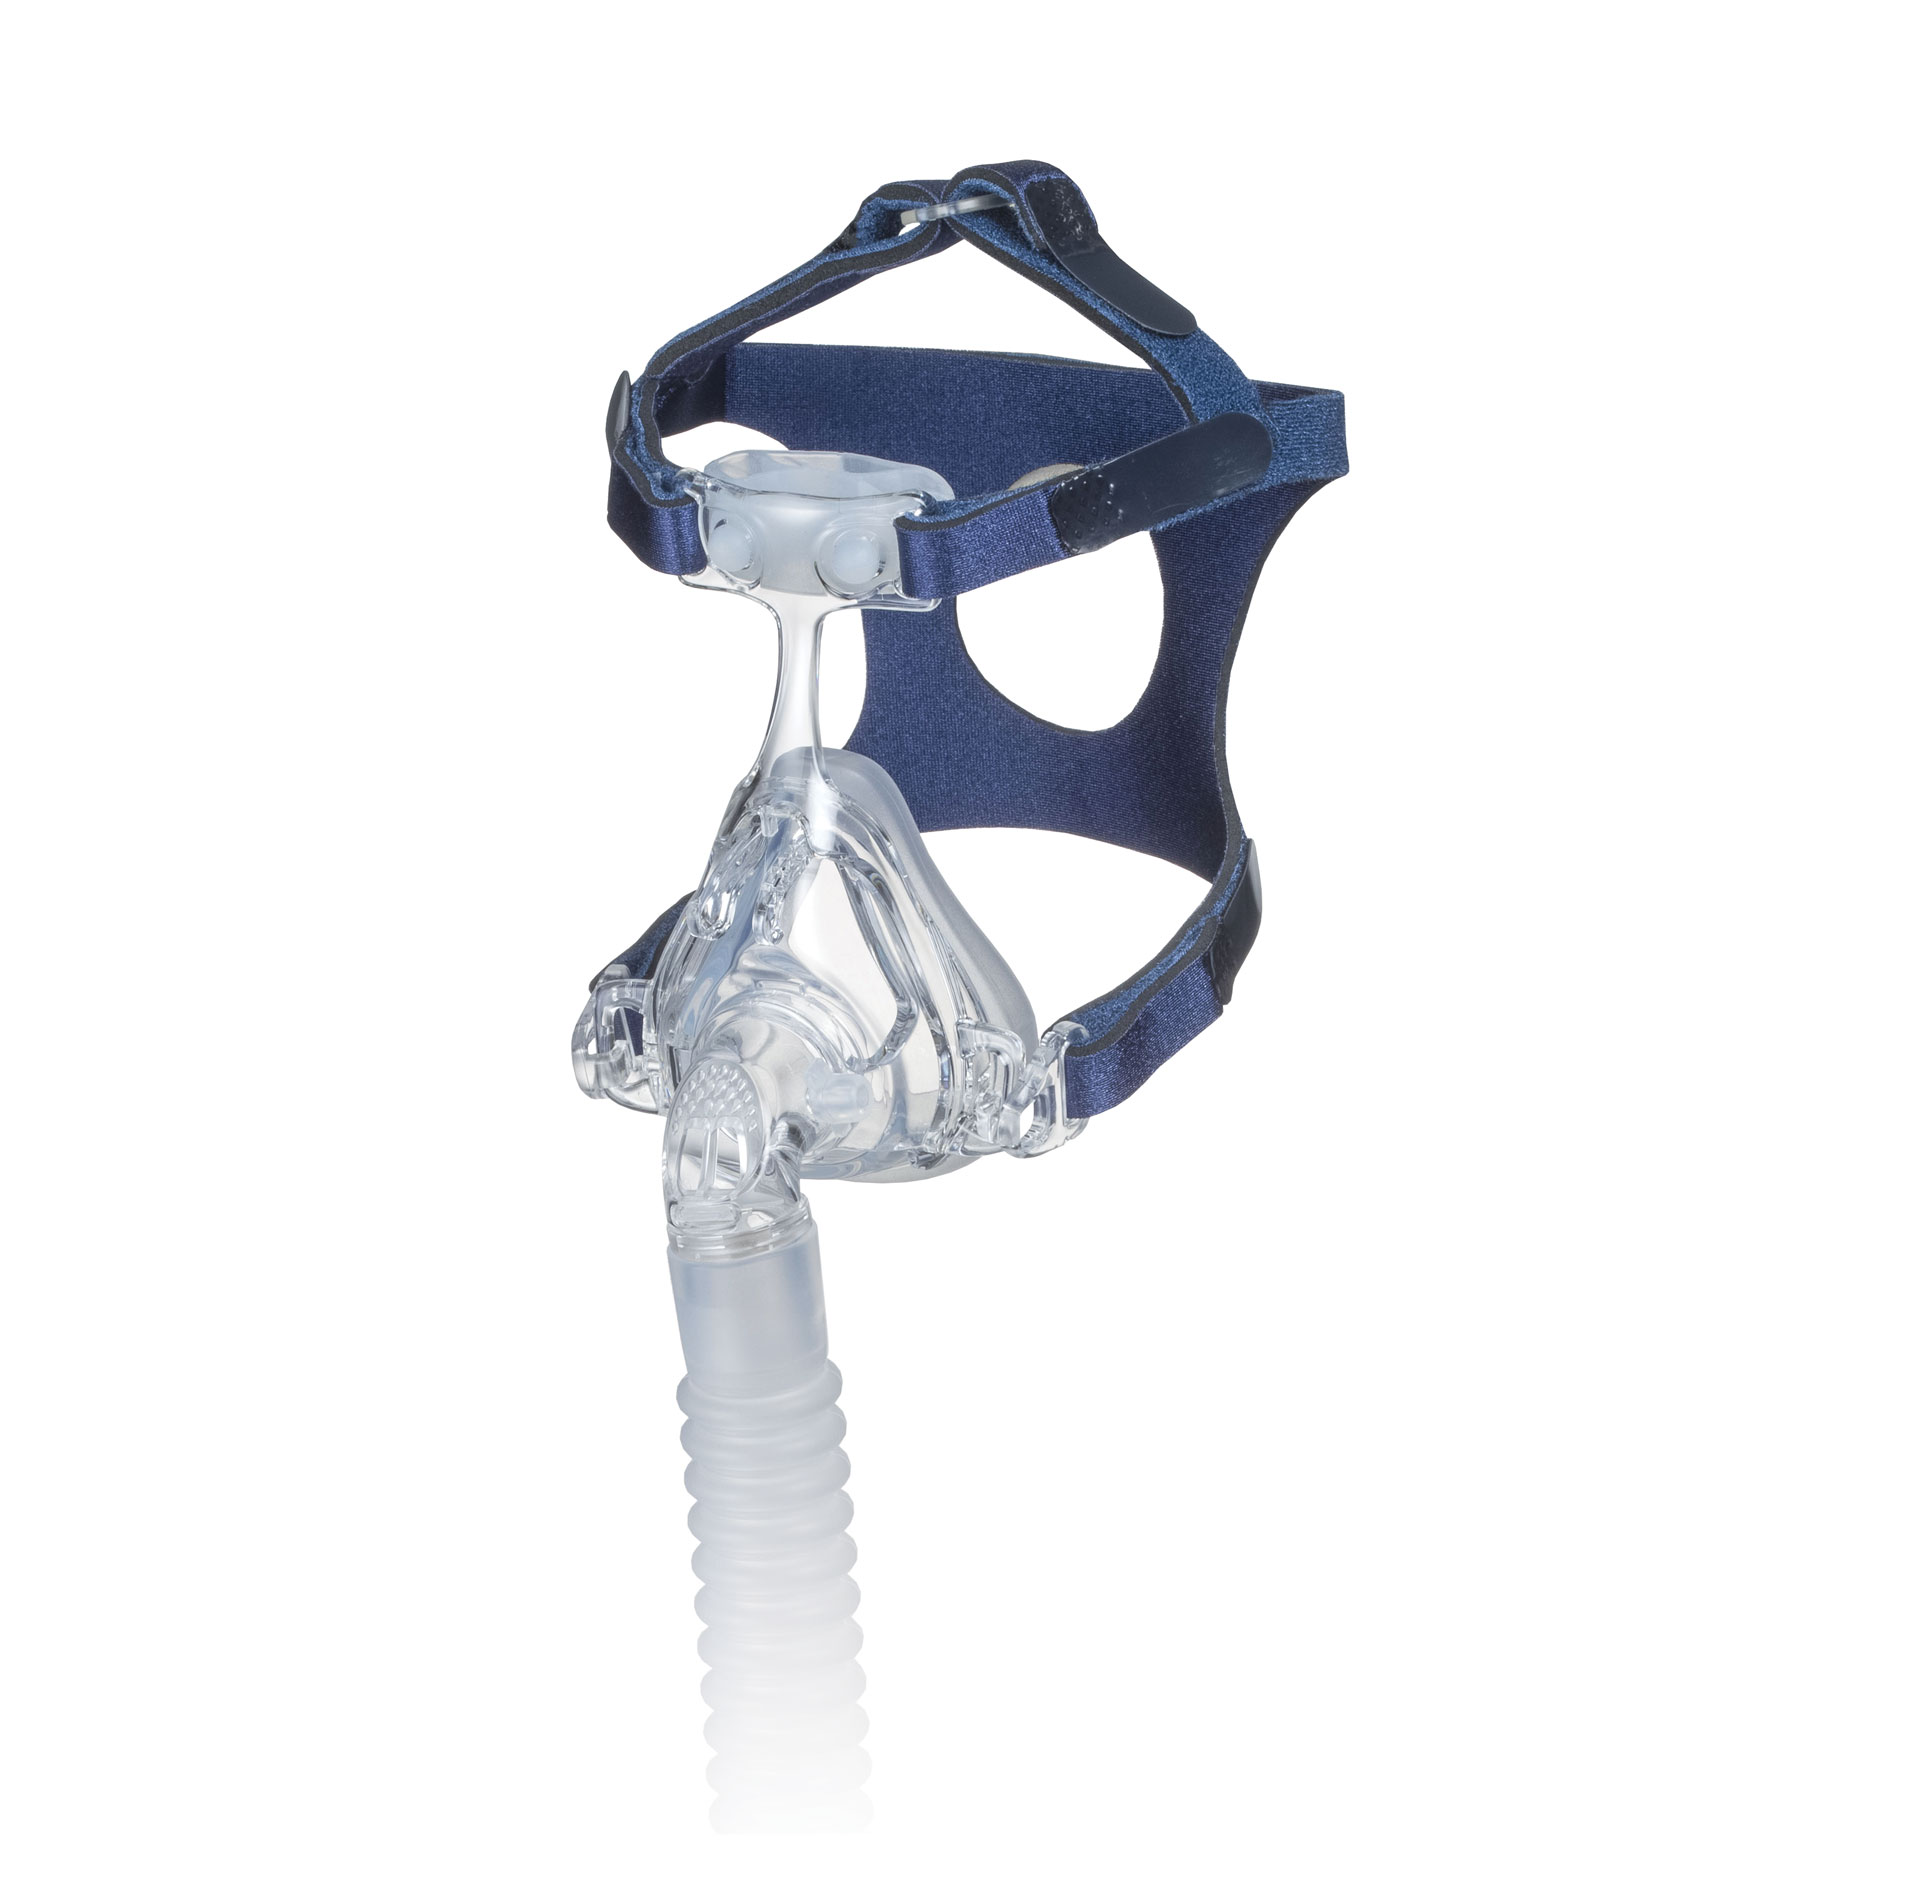 CPAP artificial ventilation mask - CM007 - Sunset Healthcare Solutions